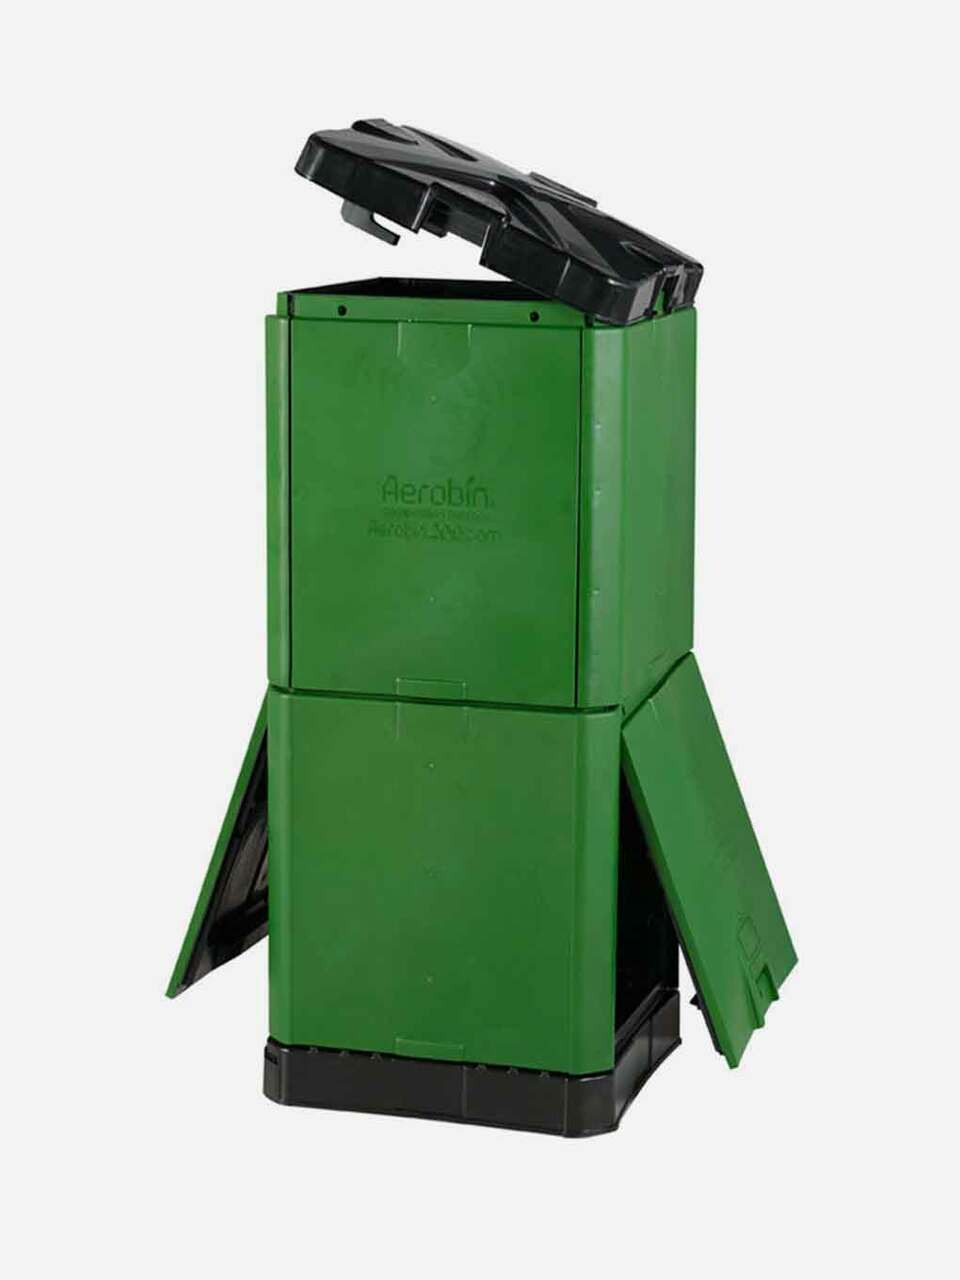 Aerobin 200 Litre Compost Bin